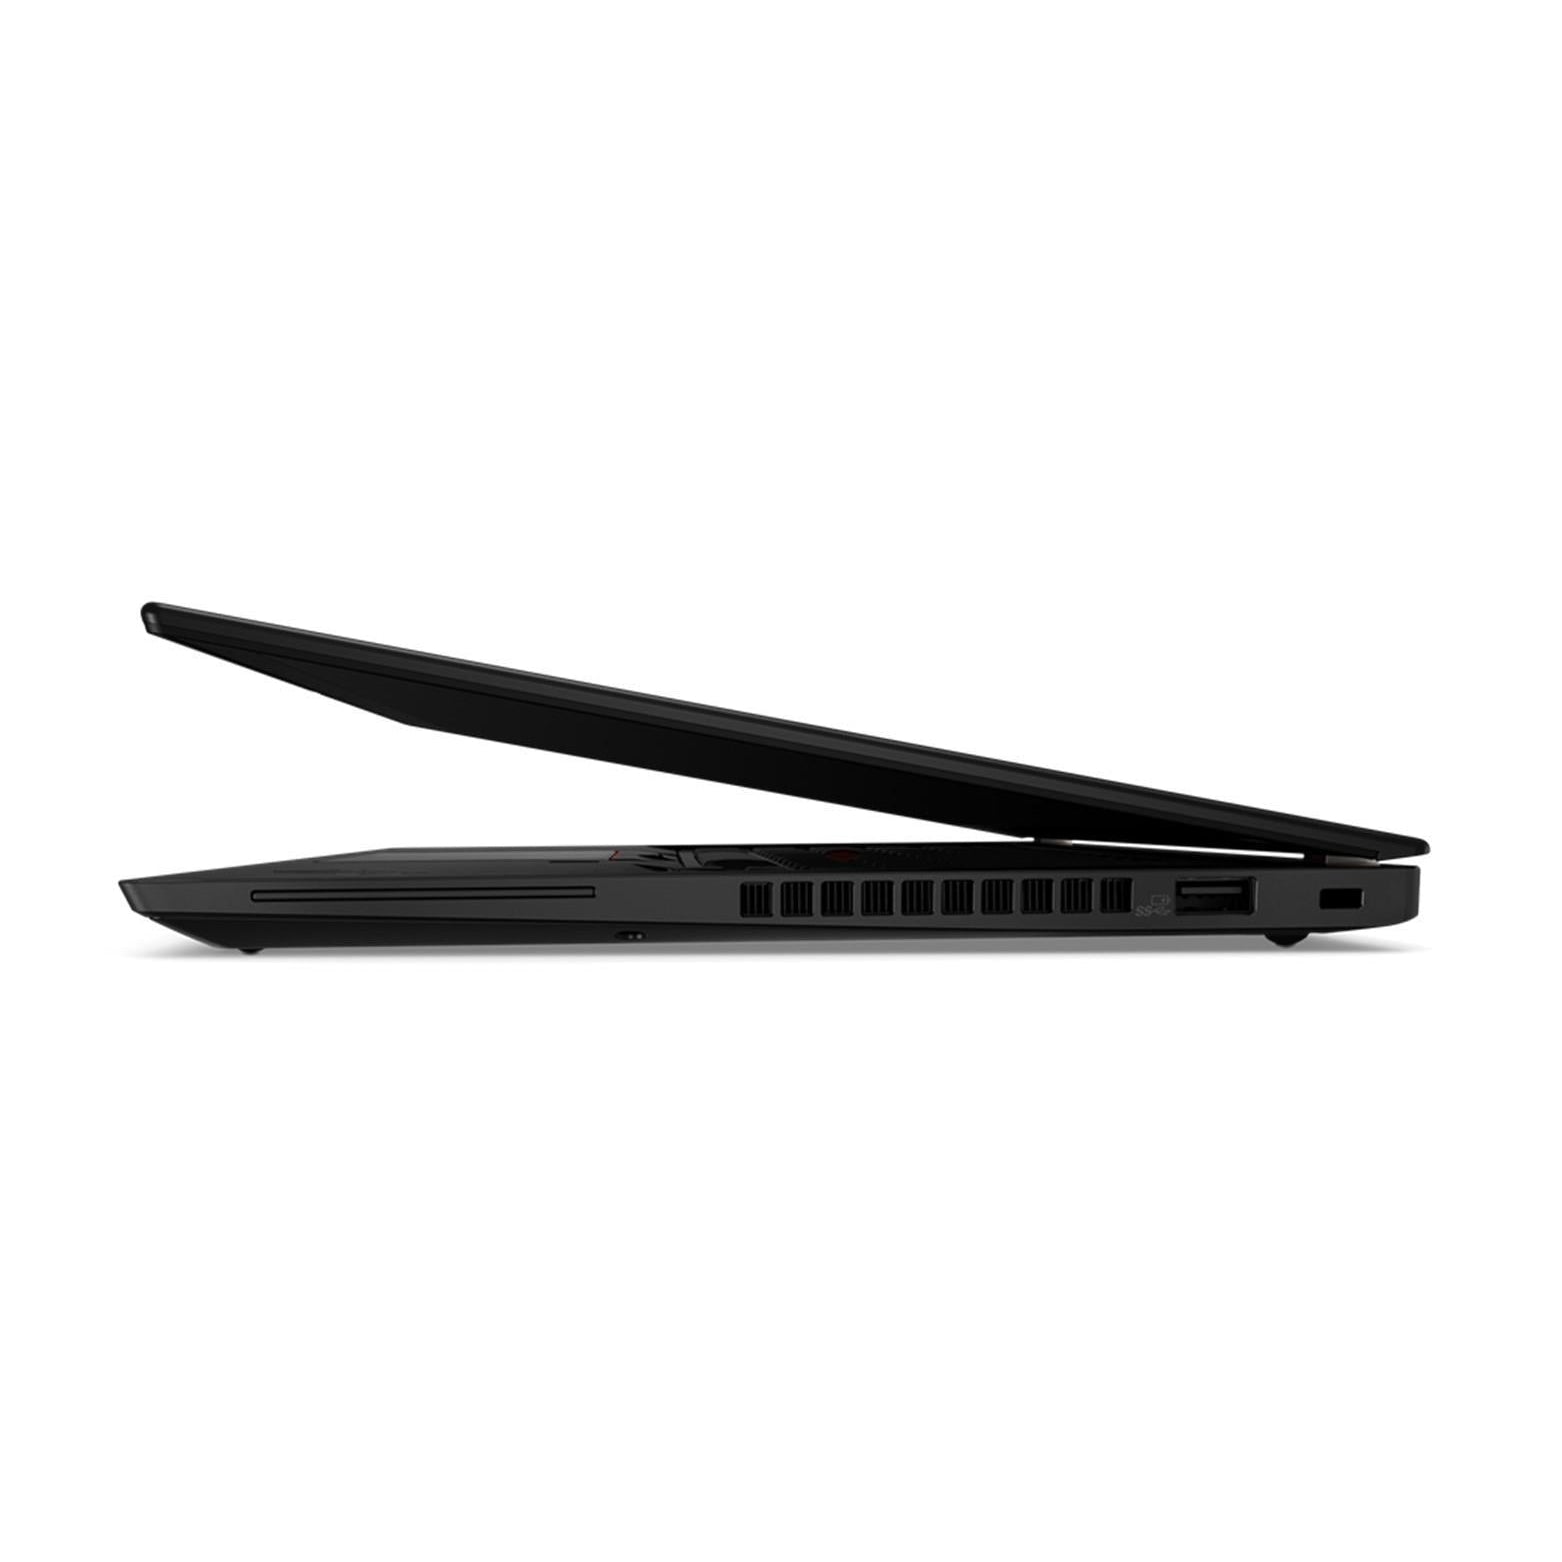 Lenovo ThinkPad 13 2nd Gen Intel Core i5 7th Generation 8GB RAM 128GB SSD - Black - Good Condition